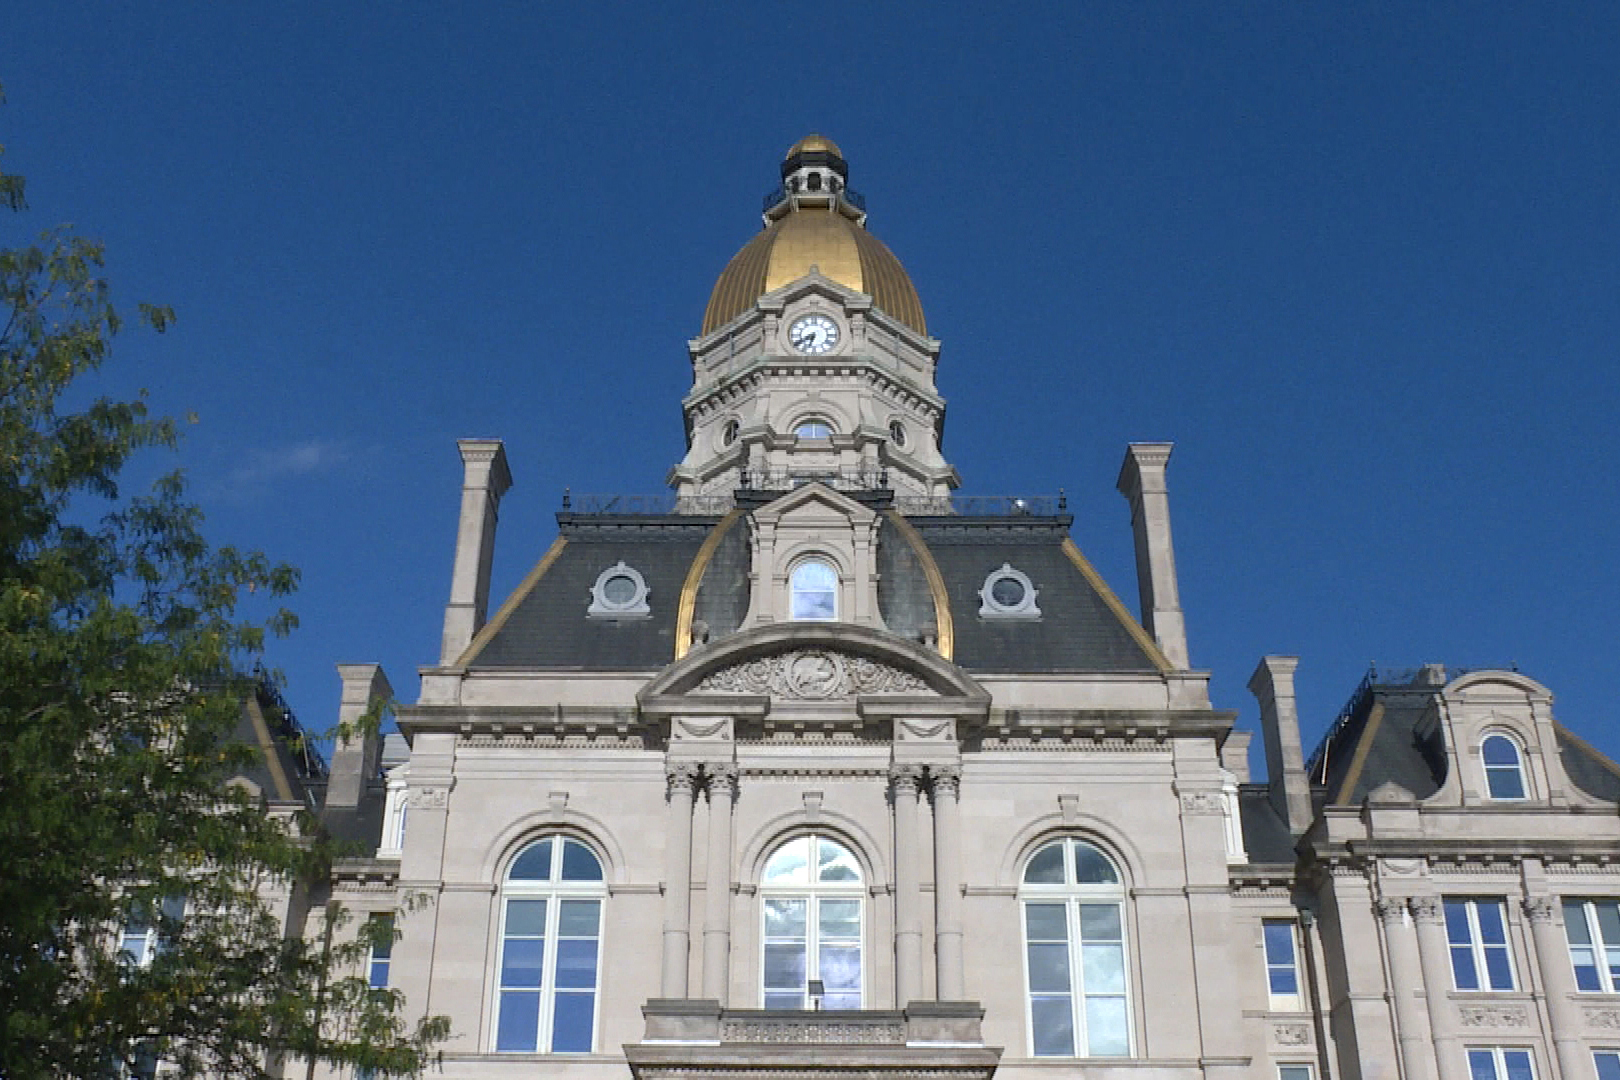 The Vigo County courthouse.